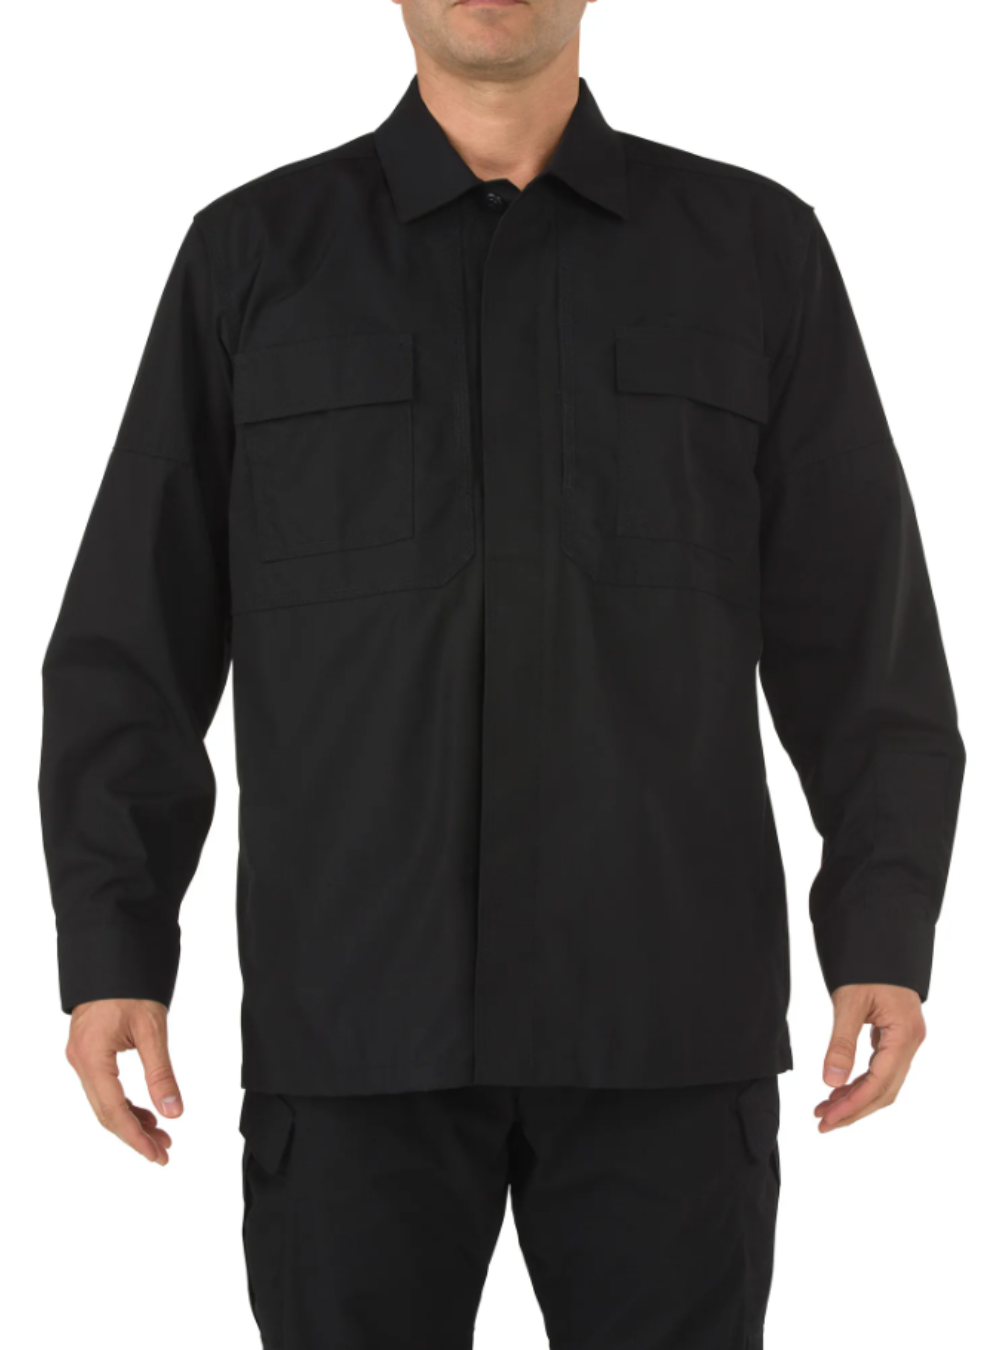 5.11 Tactical Ripstop TDU Long Sleeve Shirt